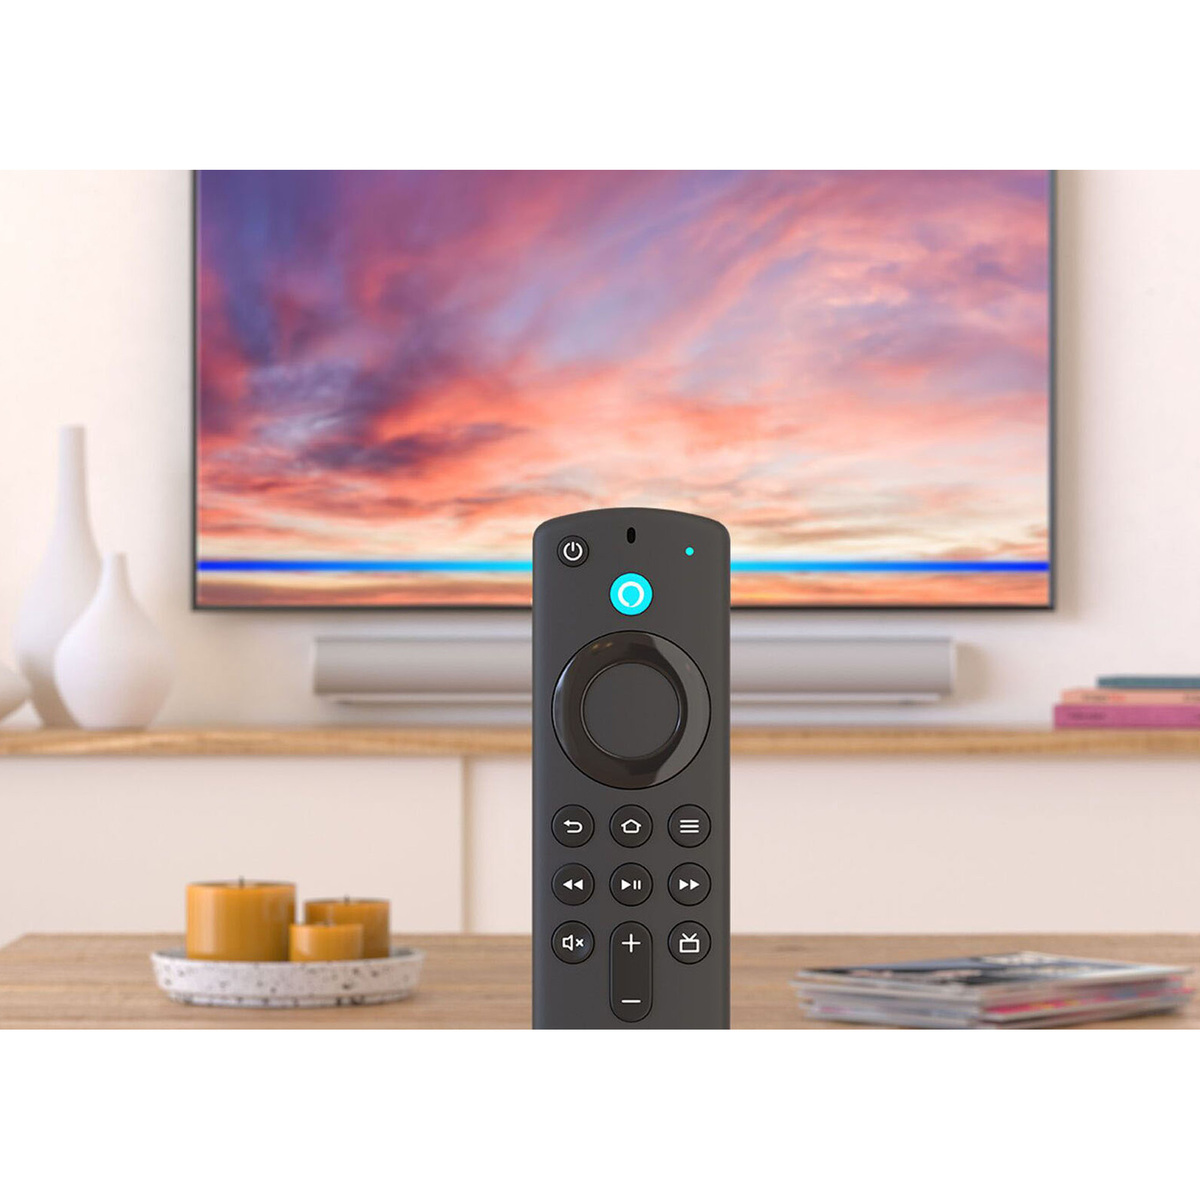 Fire TV Stick 4K MAX 2021 Streaming device WiFi-6 Alexa